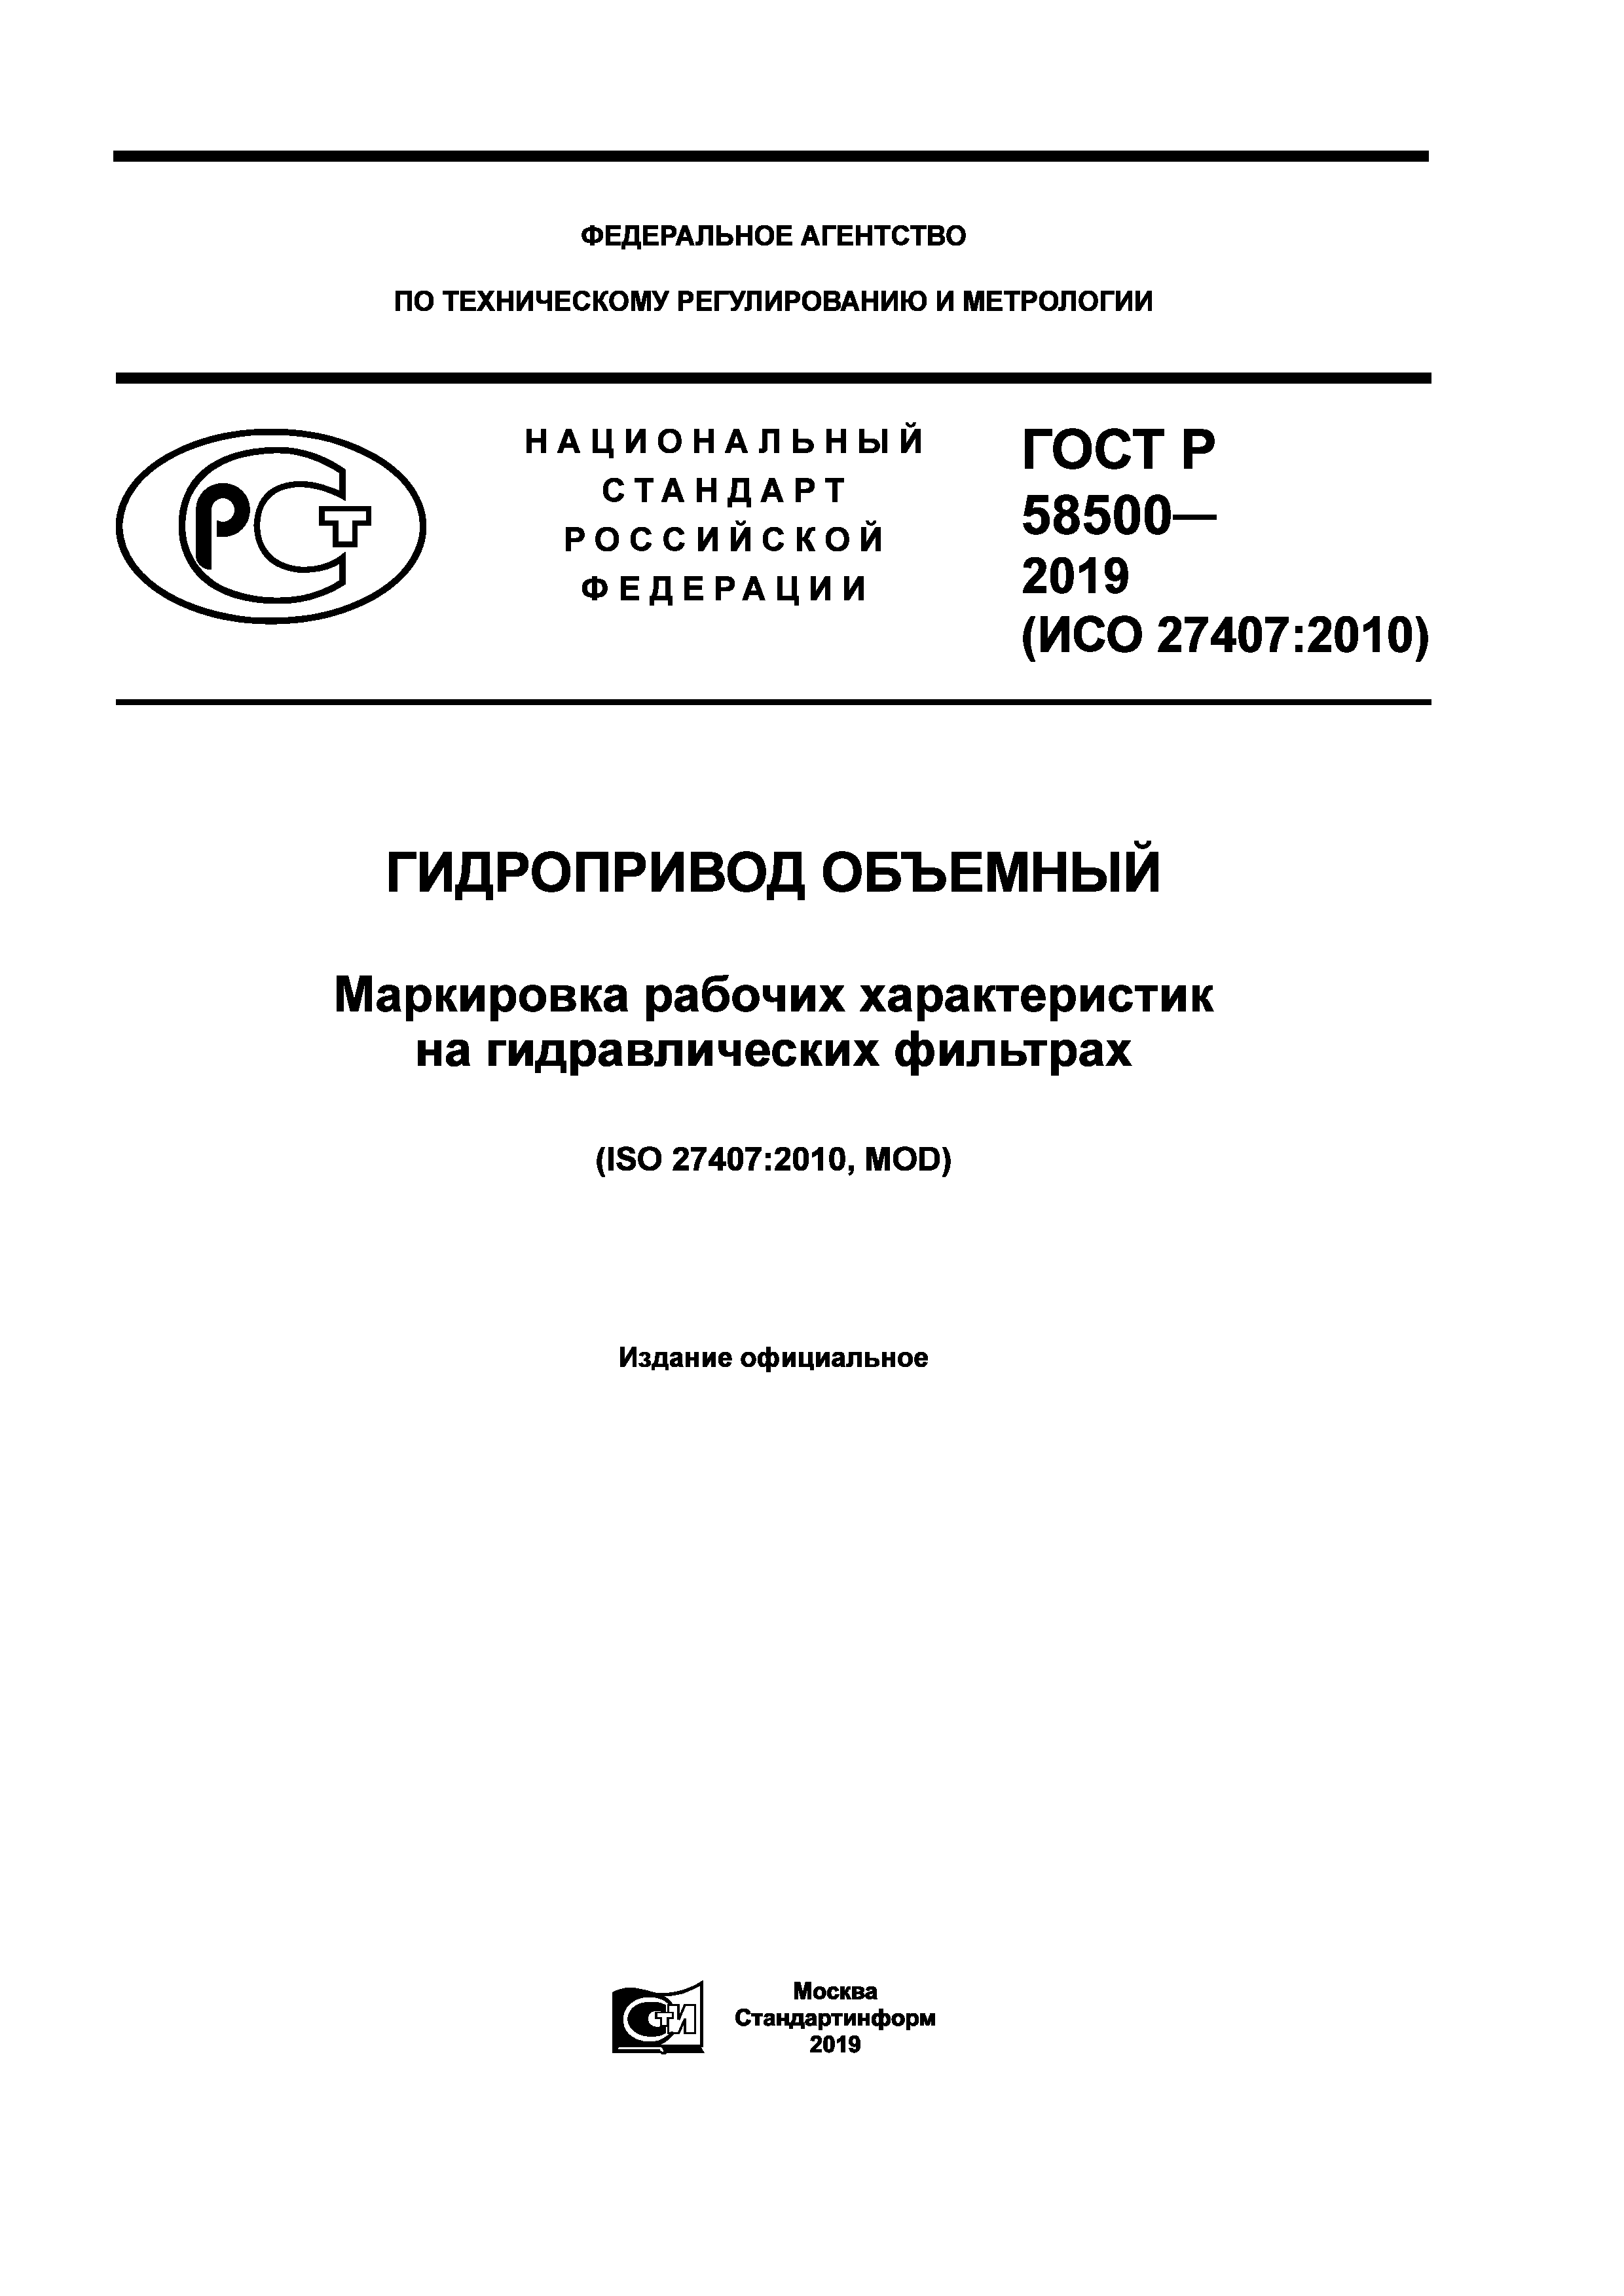 ГОСТ Р 58500-2019